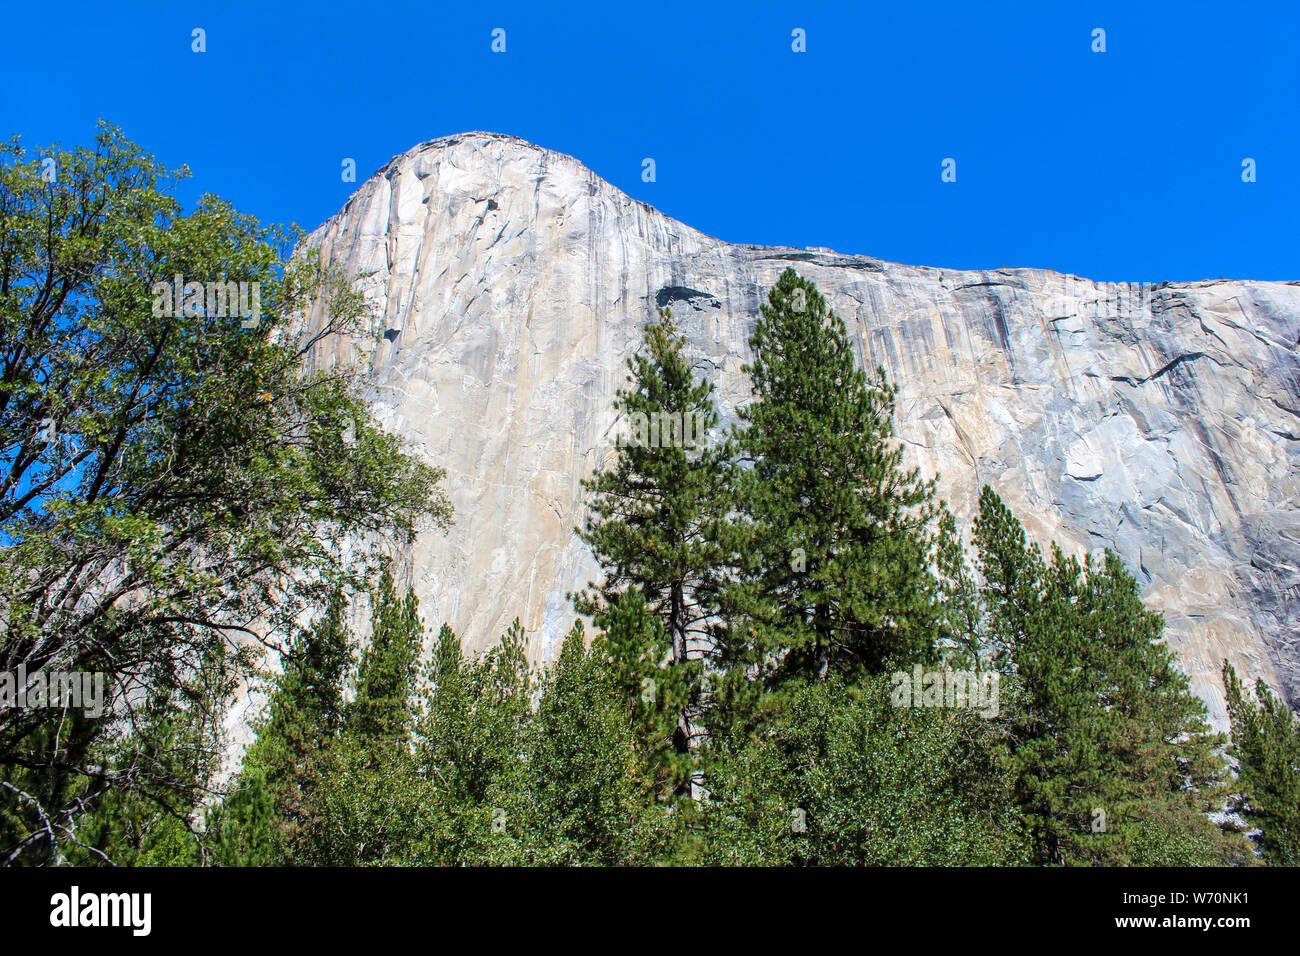 El Capitan, vertical rock formation in Yosemite National Park, California, USA Banque D'Images